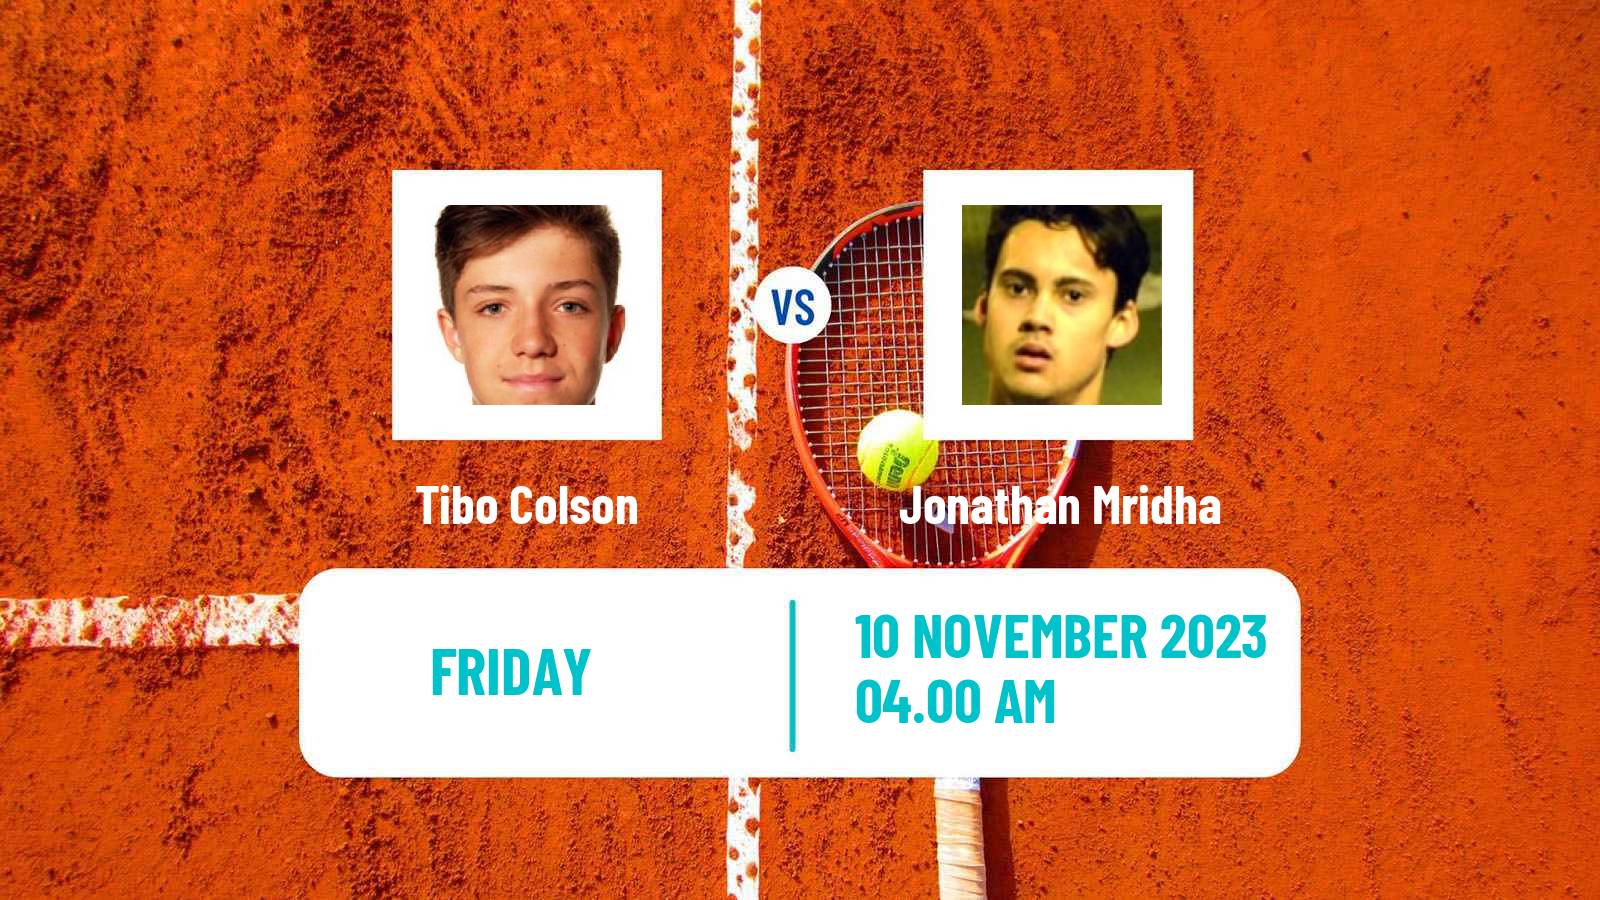 Tennis ITF M25 Trnava 2 Men Tibo Colson - Jonathan Mridha